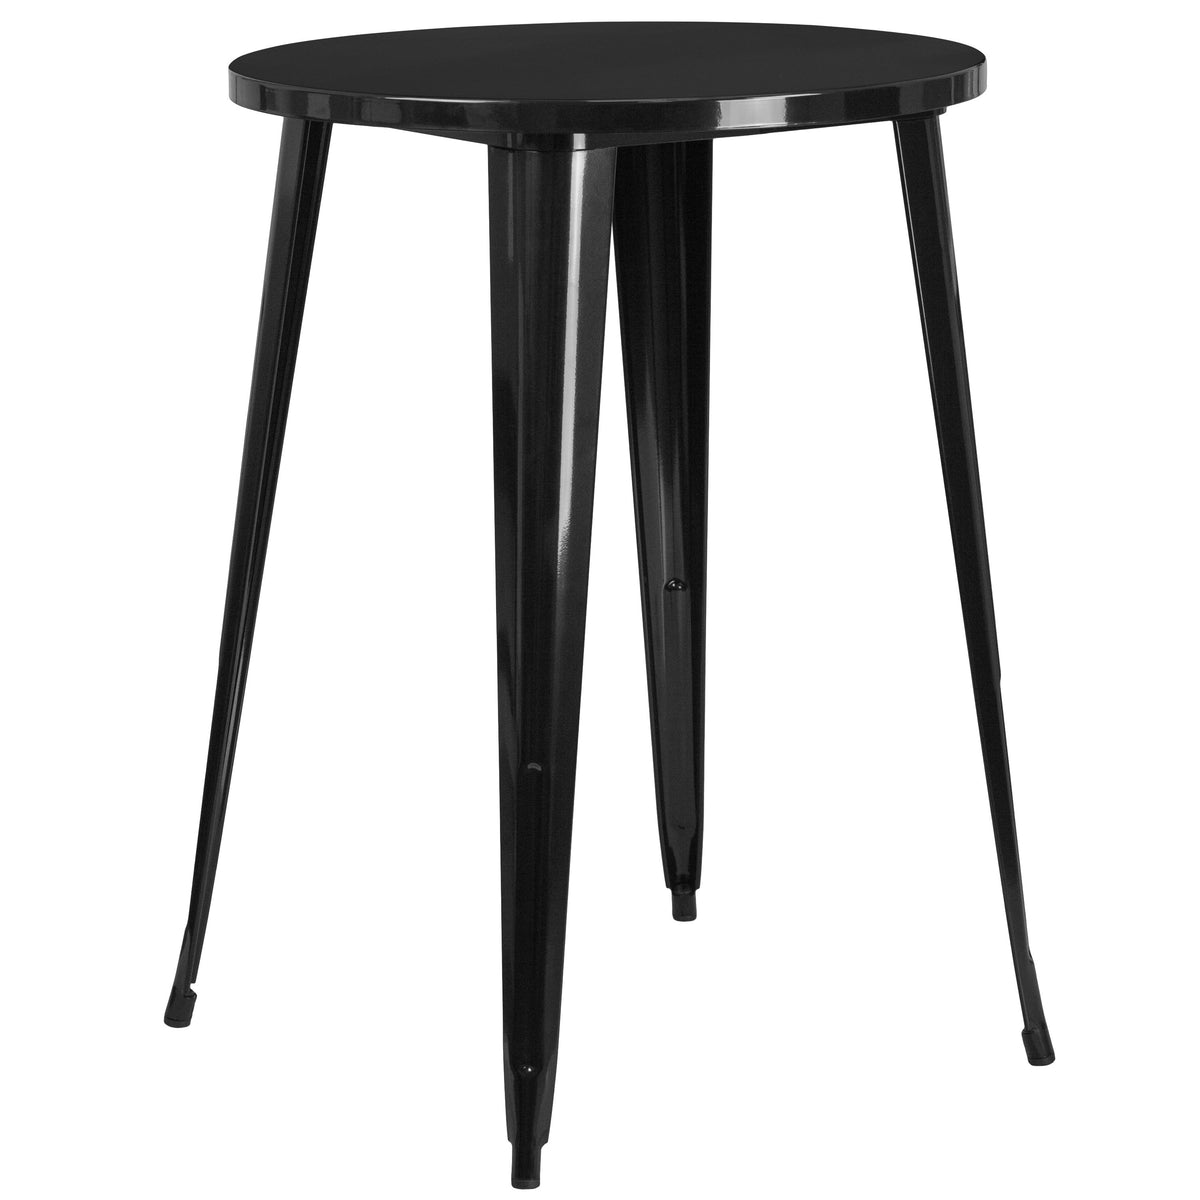 Black |#| 30inch Round Black Metal Indoor-Outdoor Bar Height Table - Industrial Table